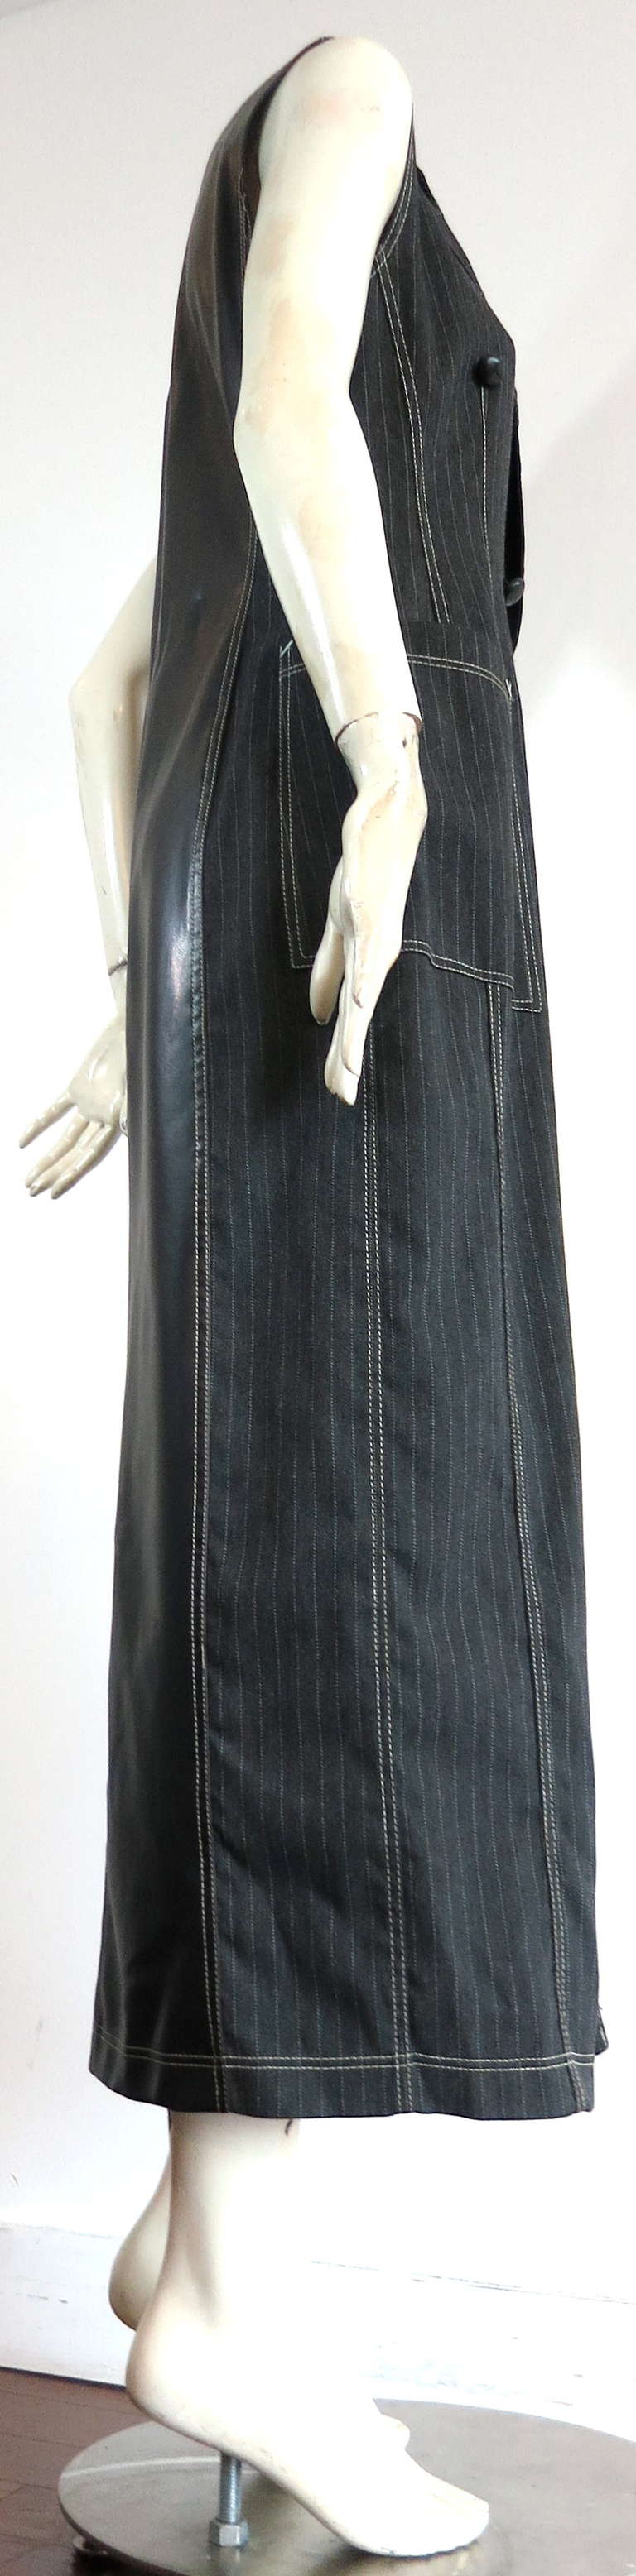 1980's GAULTIER Pinstripe coat dress For Sale 1